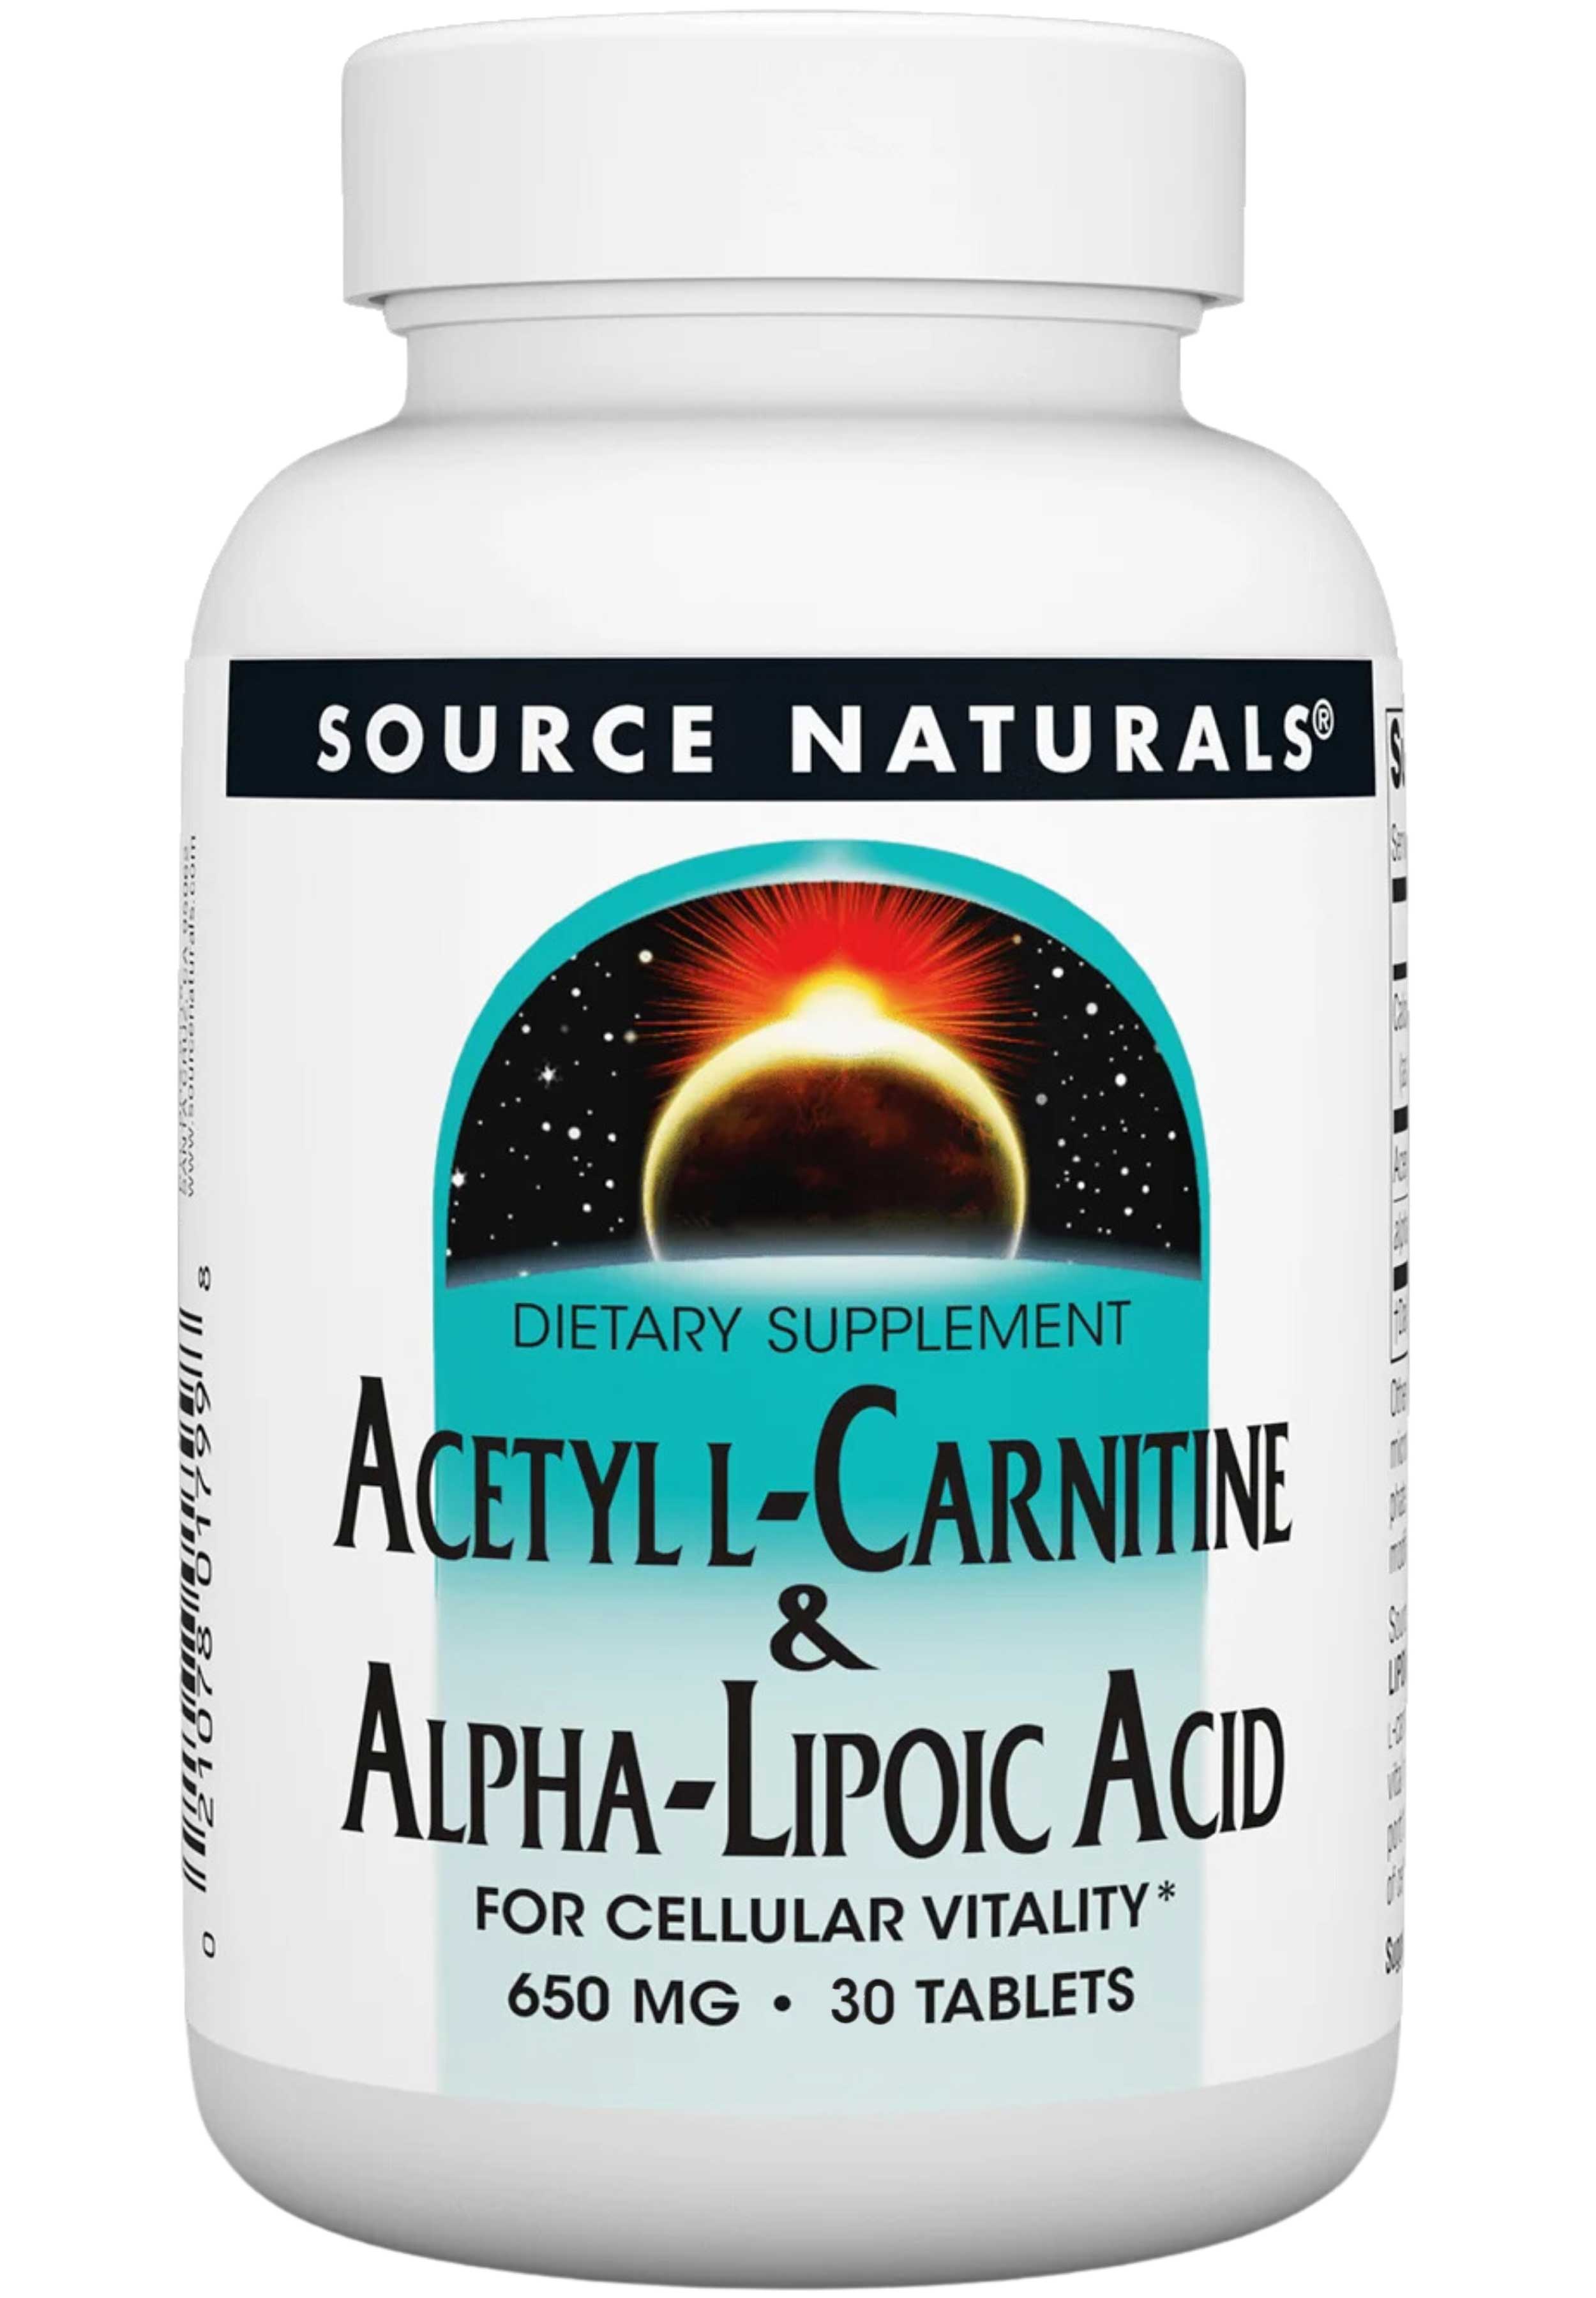 Source Naturals Acetyl L-Carnitine & Alpha Lipoic Acid